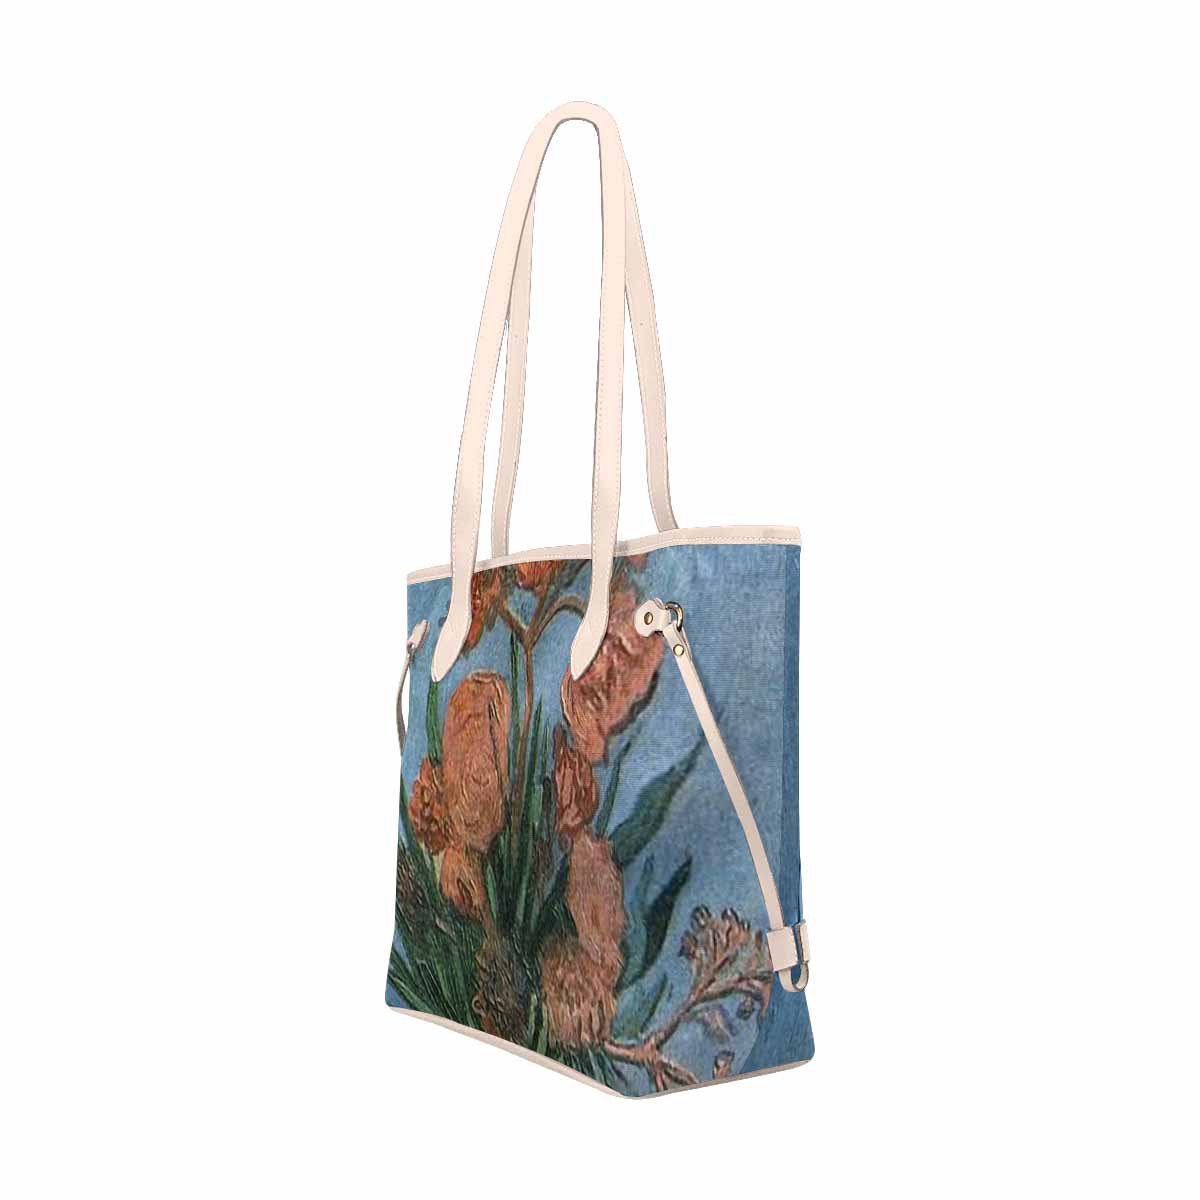 Vintage Floral Handbag, Classic Handbag, Mod 1695361 Design 50, BEIGE/TAN TRIM